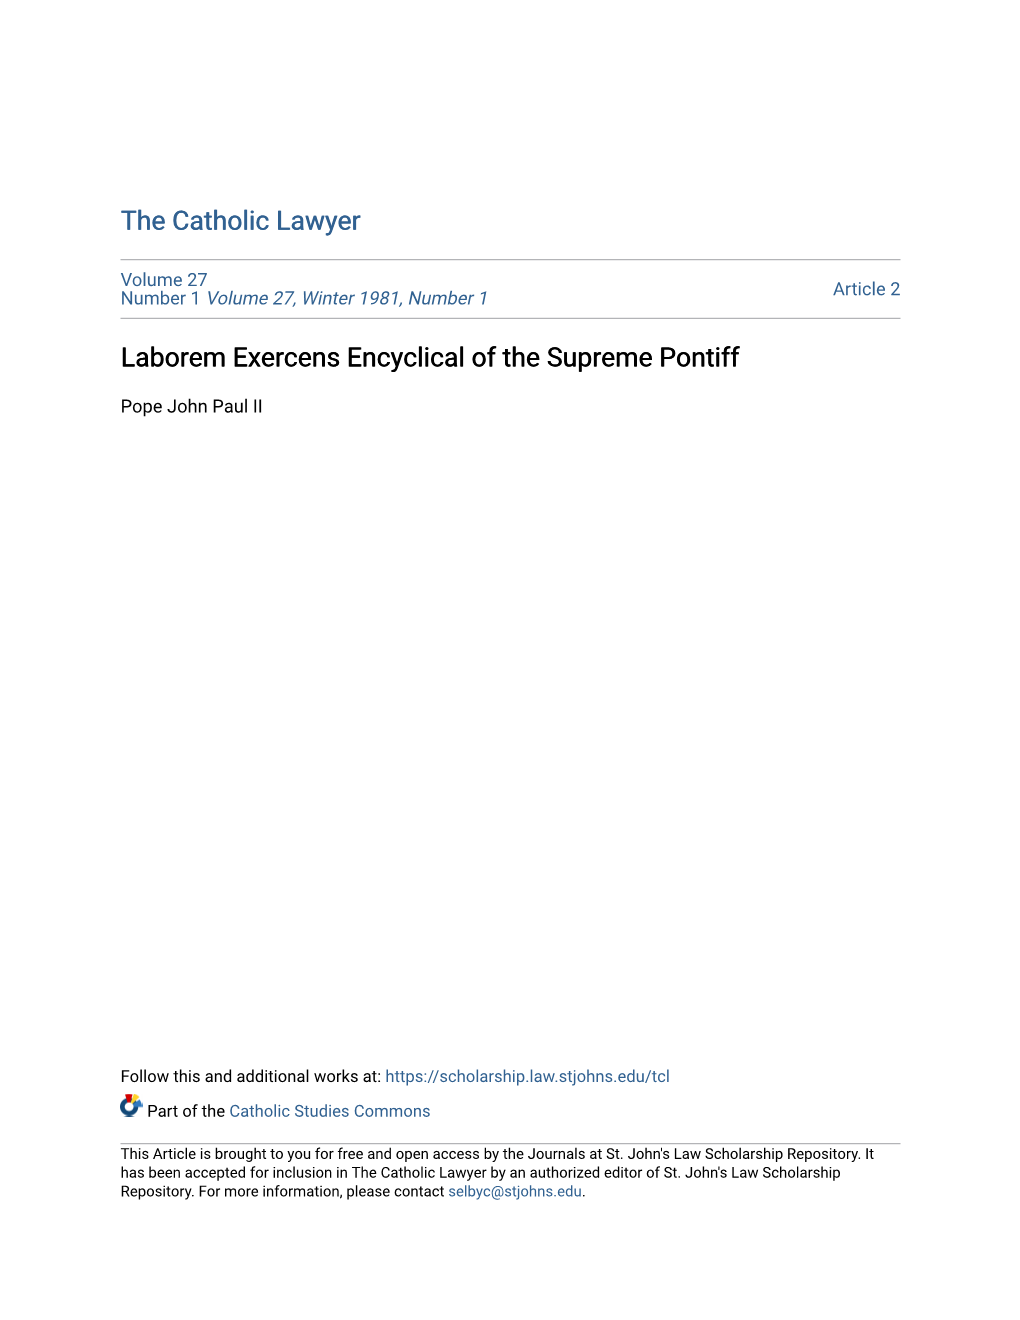 Laborem Exercens Encyclical of the Supreme Pontiff